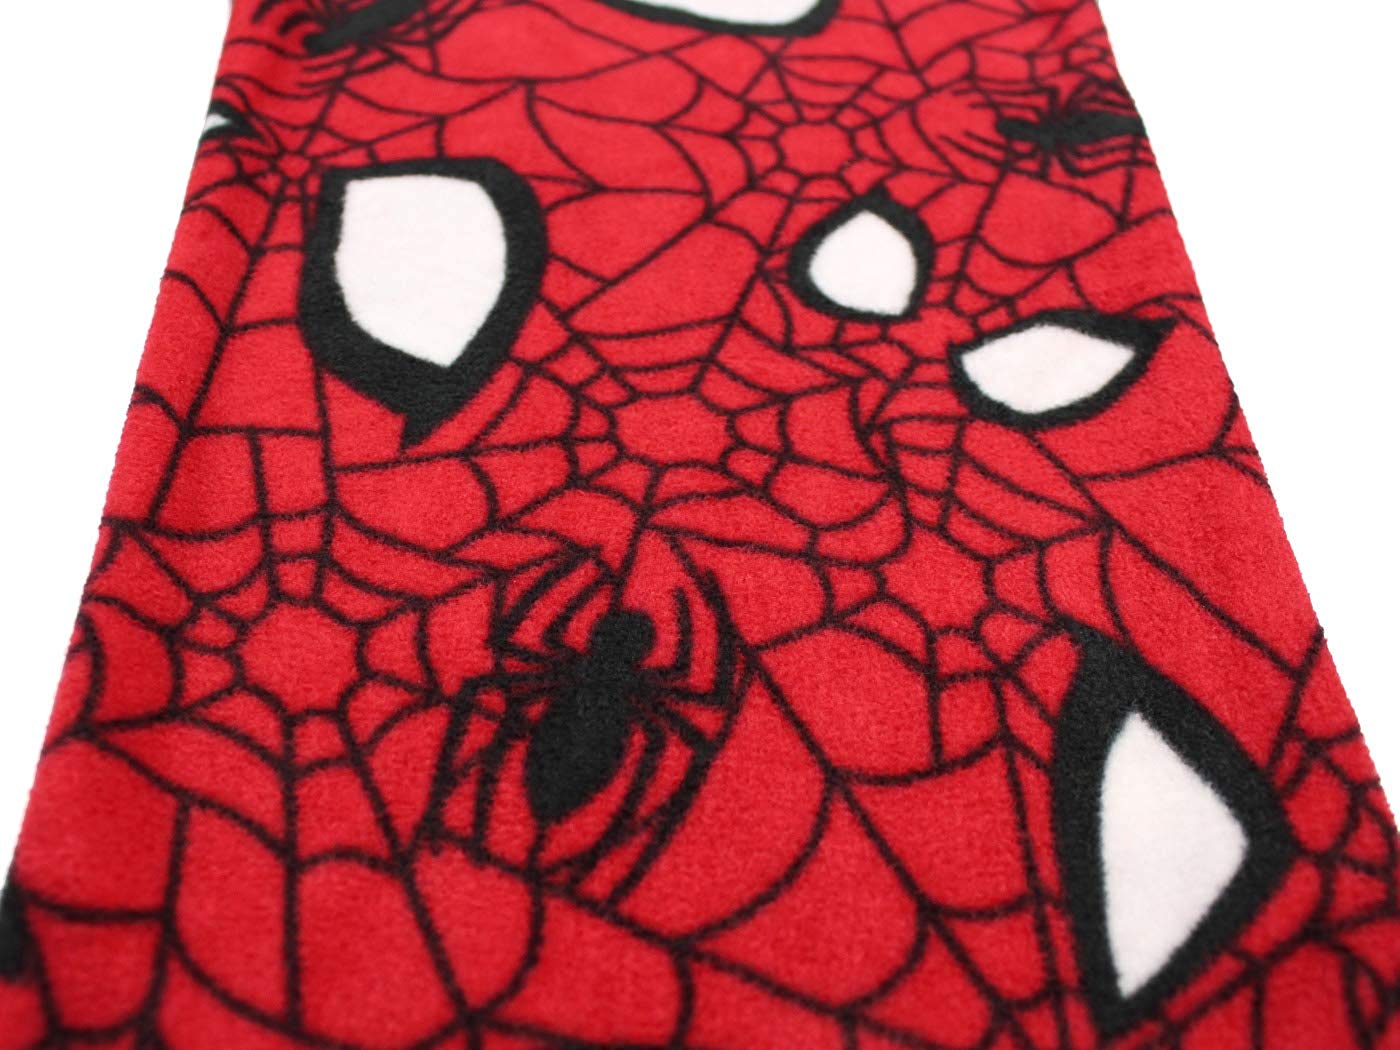 Marvel Spider-Man Mens Black/Red Flannel Sleep Pants Pajama Bottoms